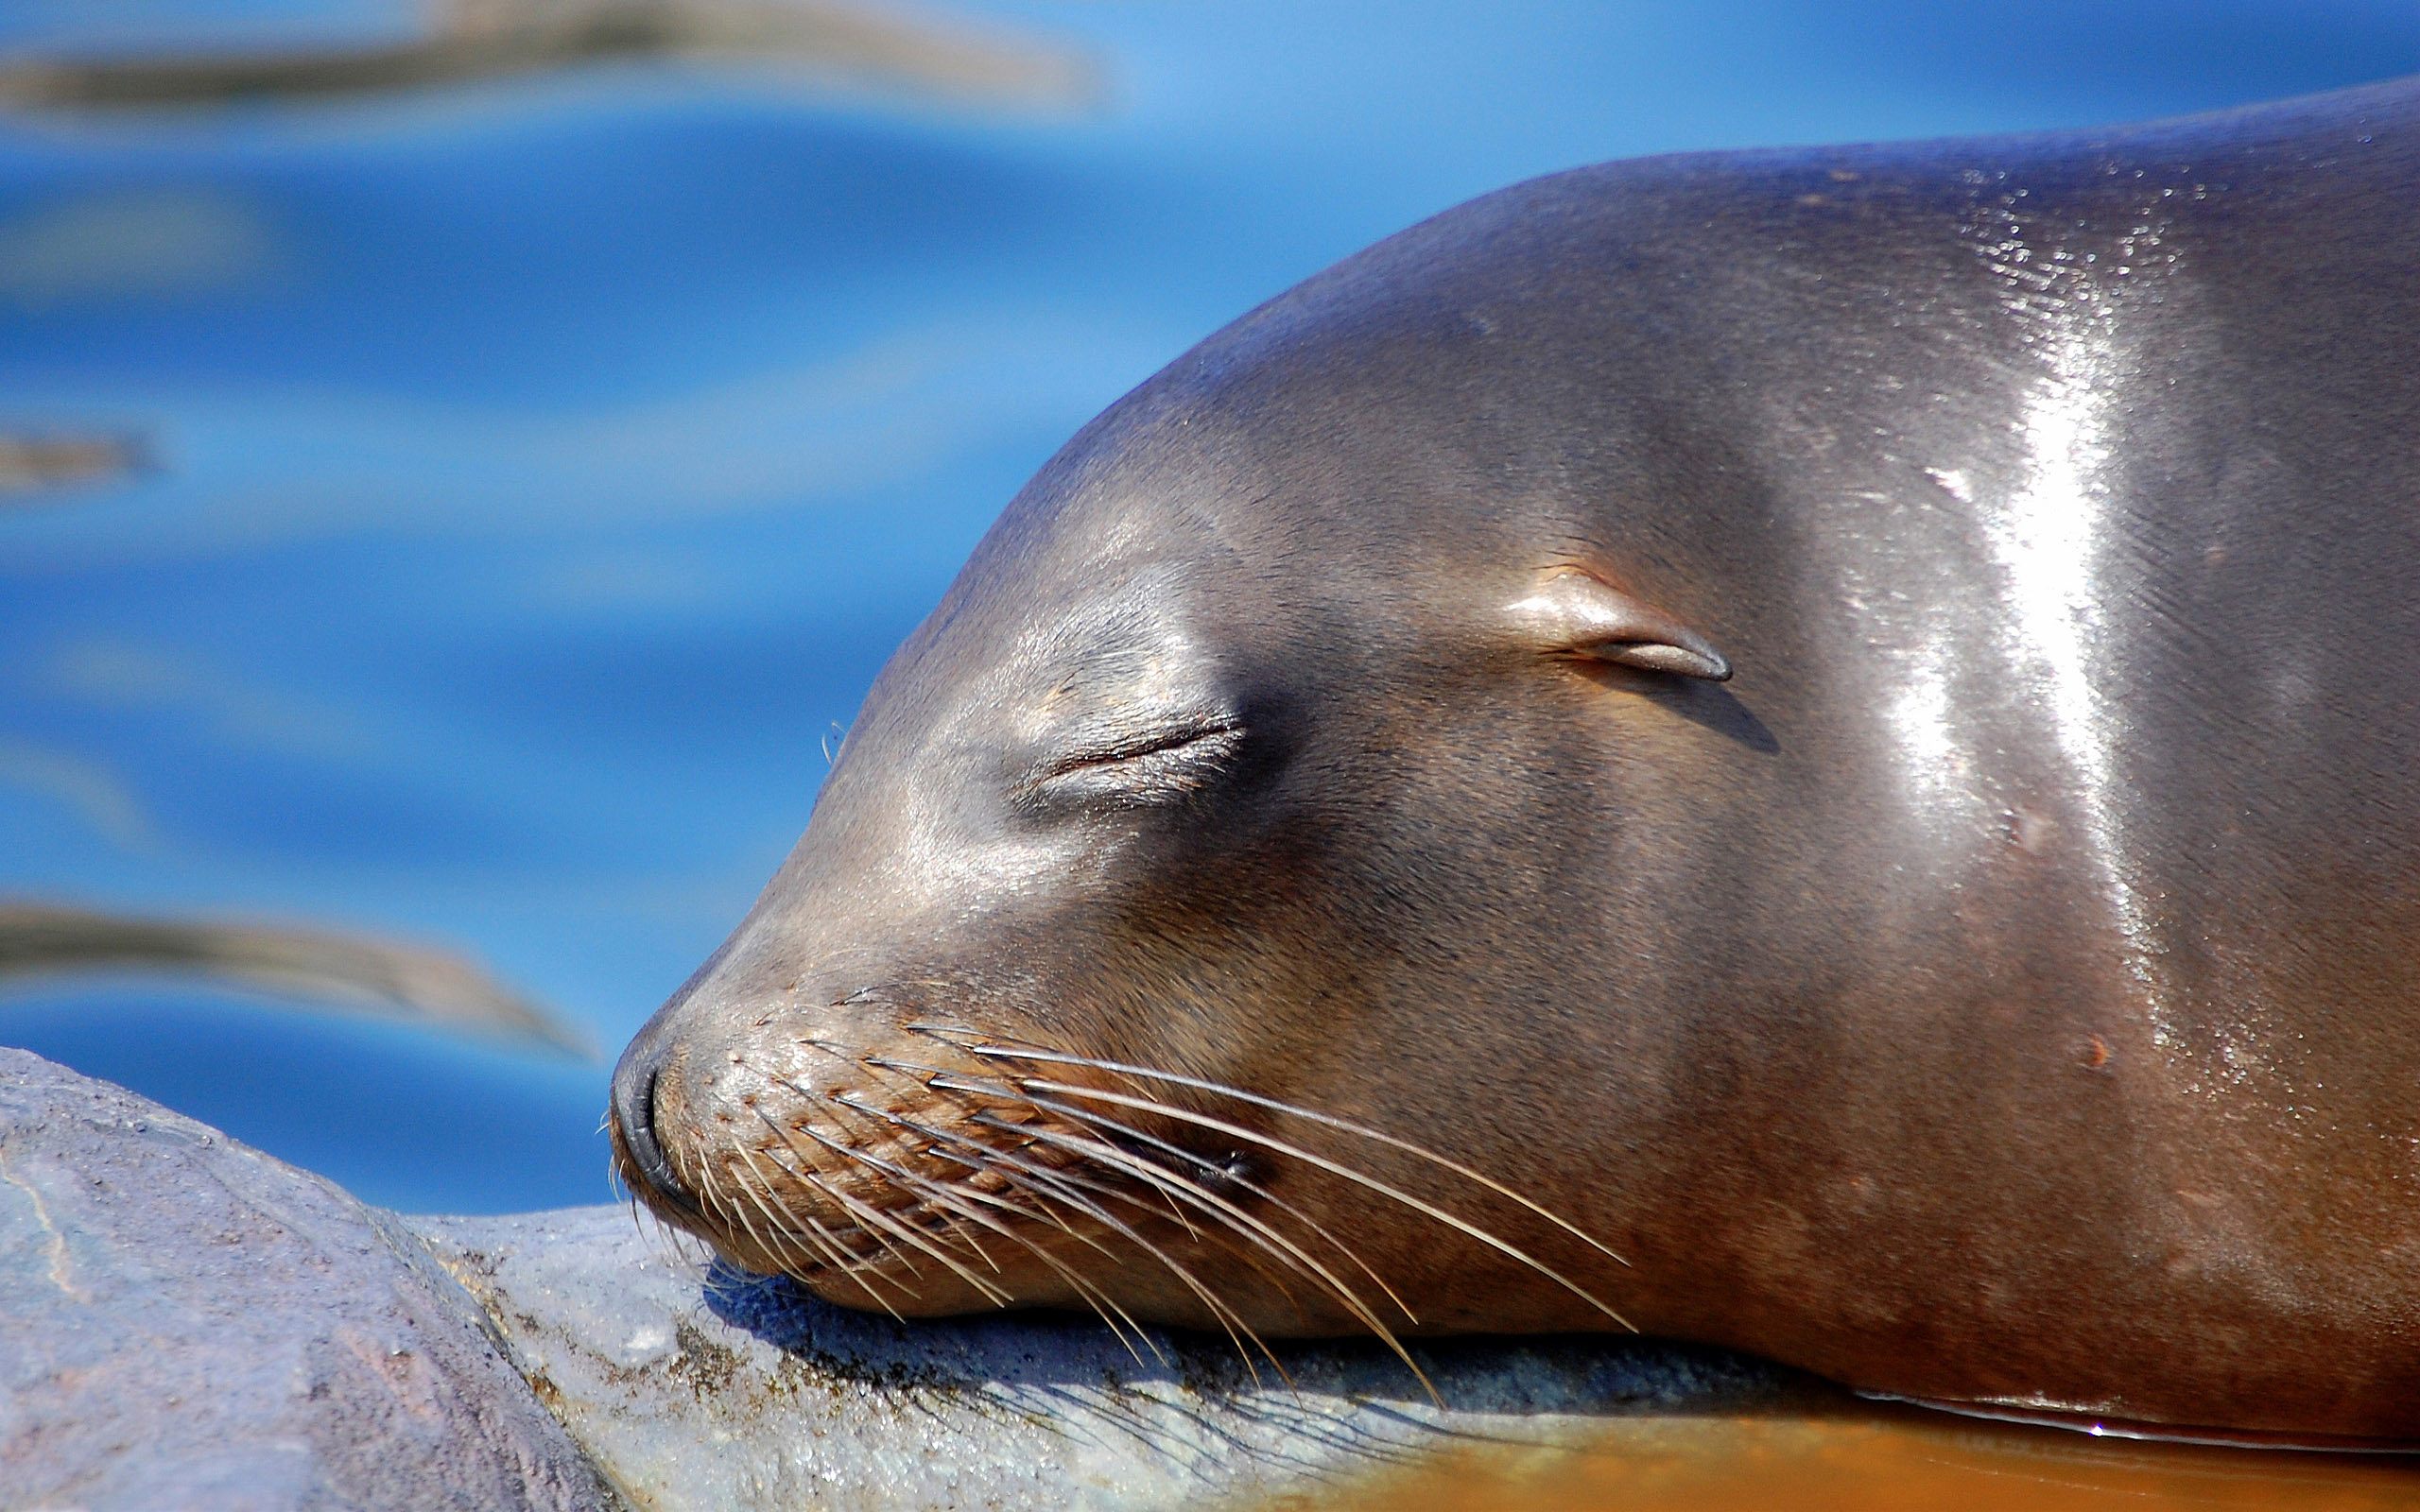 A cute animal, einnickerchen, a seal, peacefully resting.